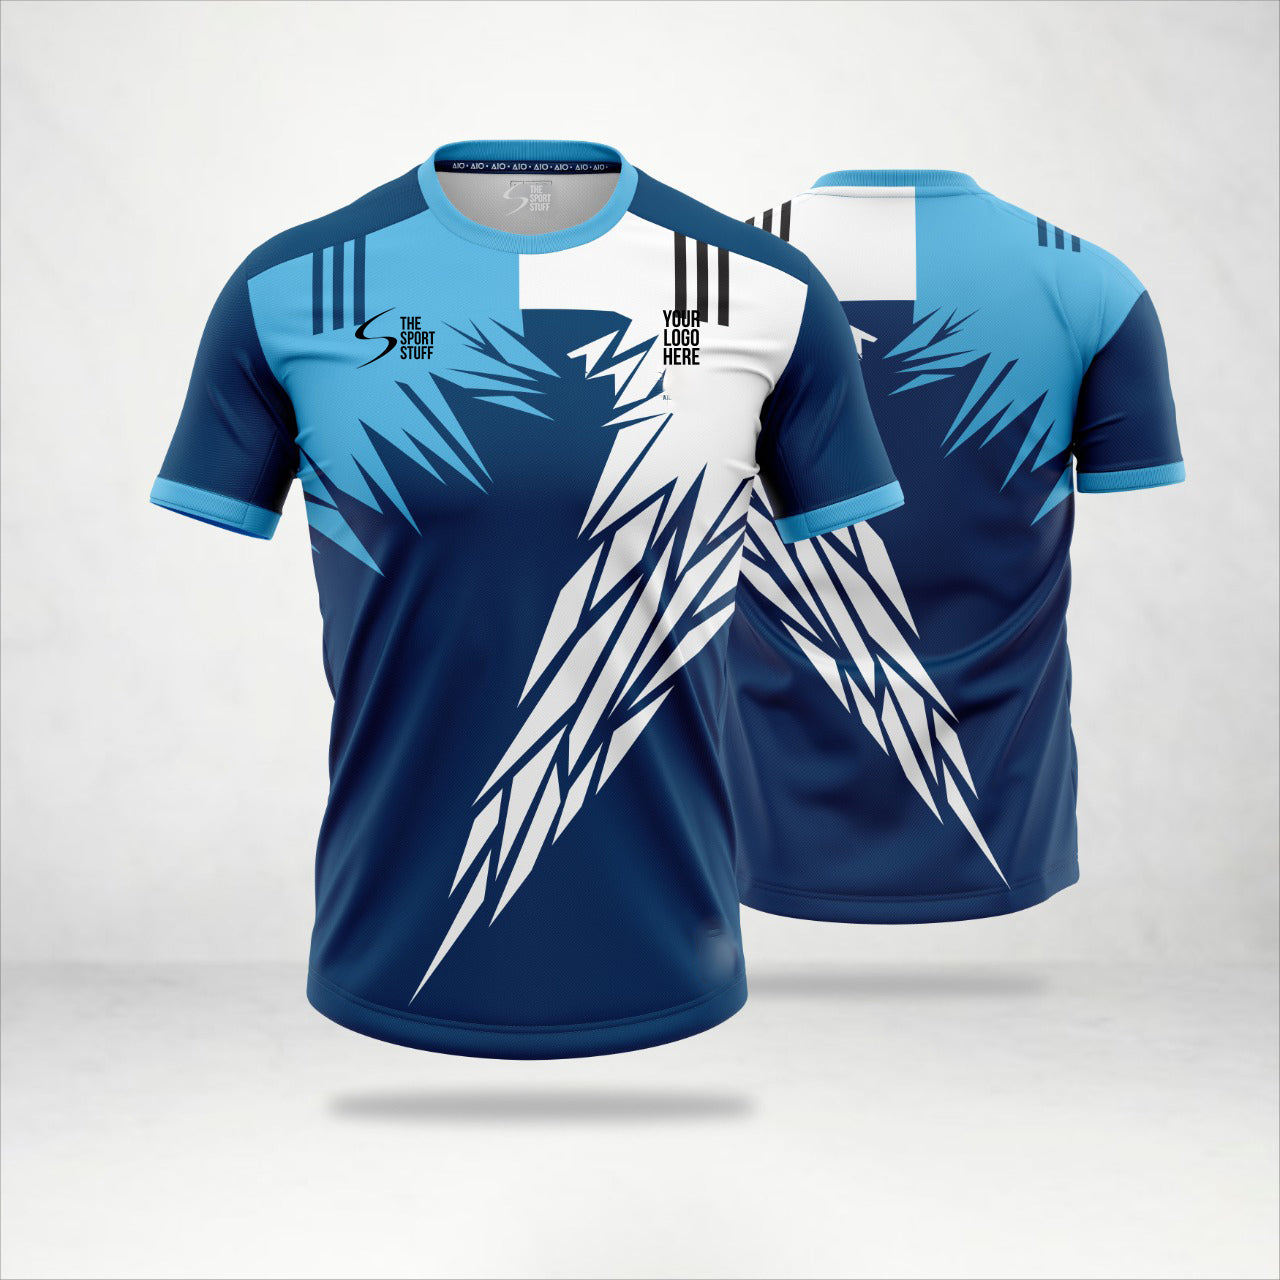 Sword Customized Football Team Jersey Design